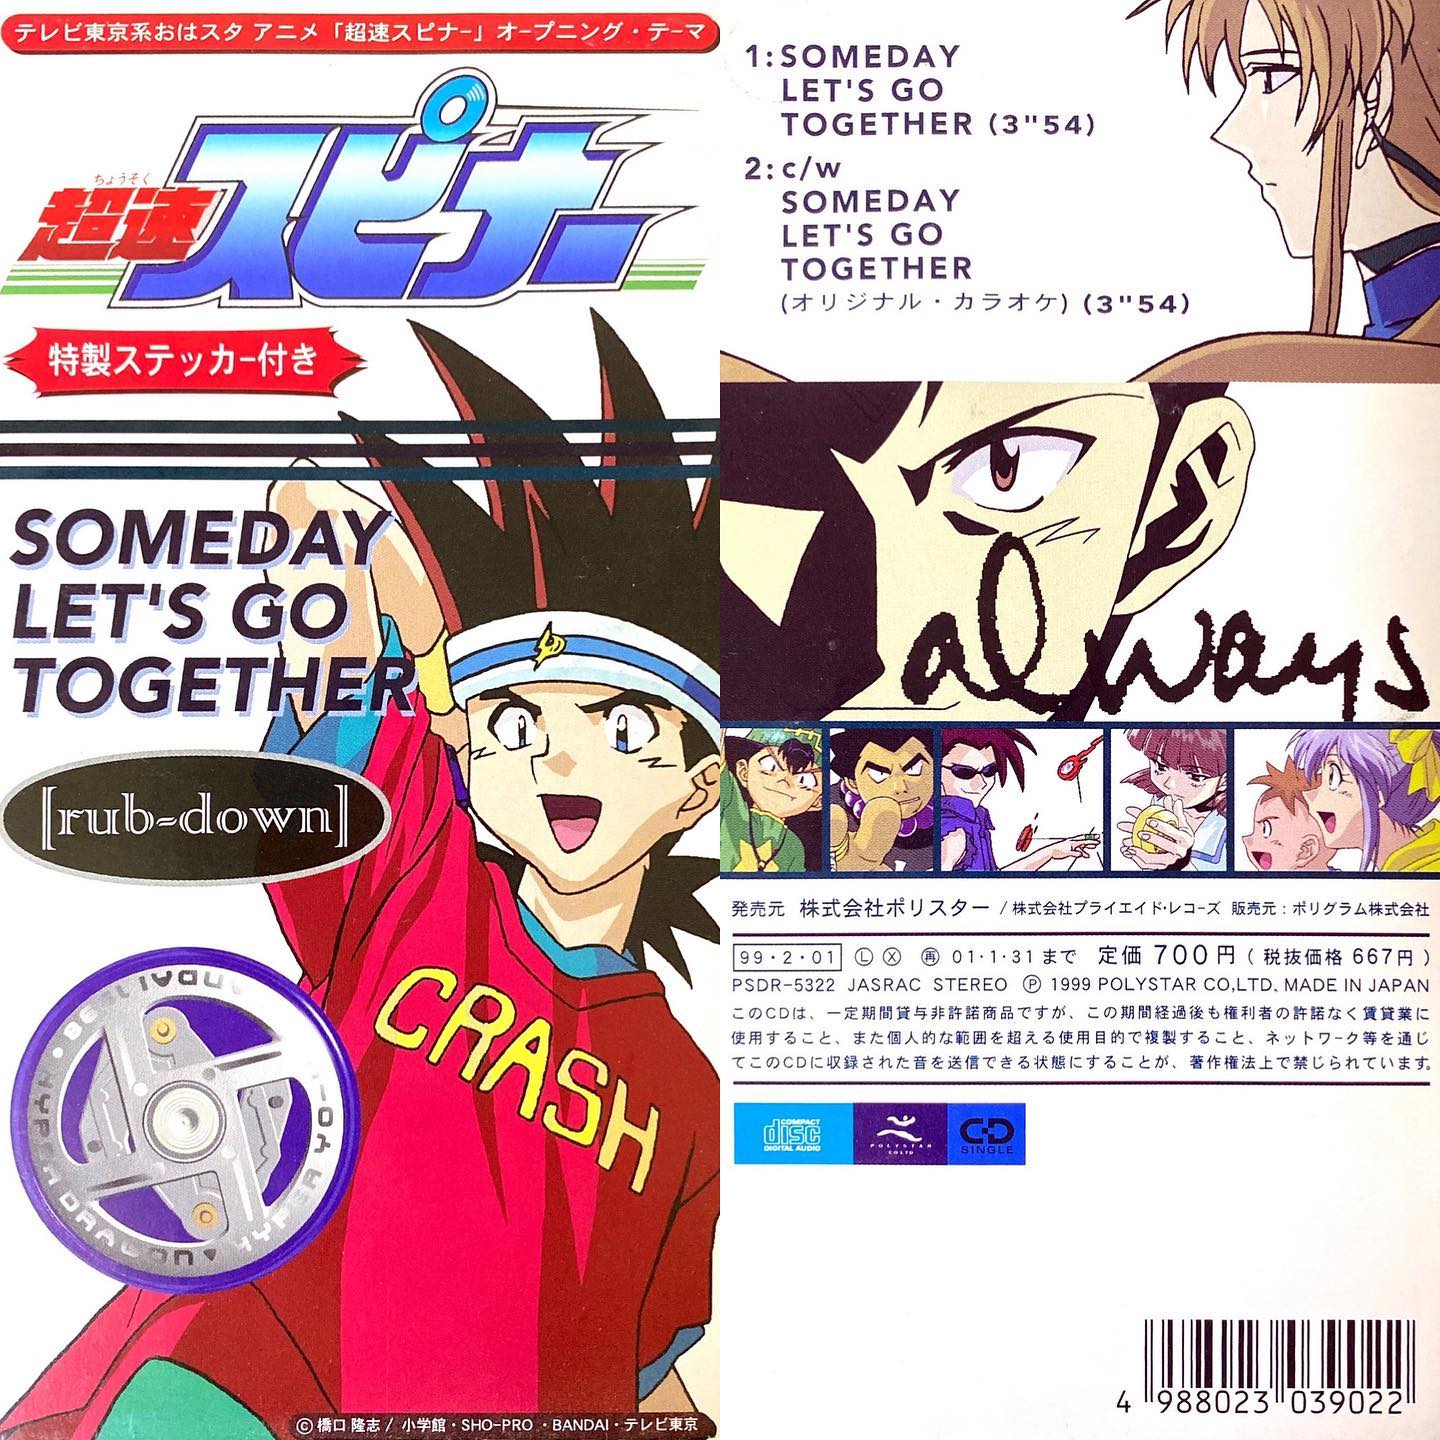 SOMEDAY LET'S GO TOGETHER/rub-down超速スピナー OP1(1998年~1999年)#センチメンタルグルーヴ#sentimental_groove #アニメ #アニソン #8cmCD #短冊CD#超速スピナー #rubdown #ハイパーヨーヨー #90年代 #コロコロコミック #animesong